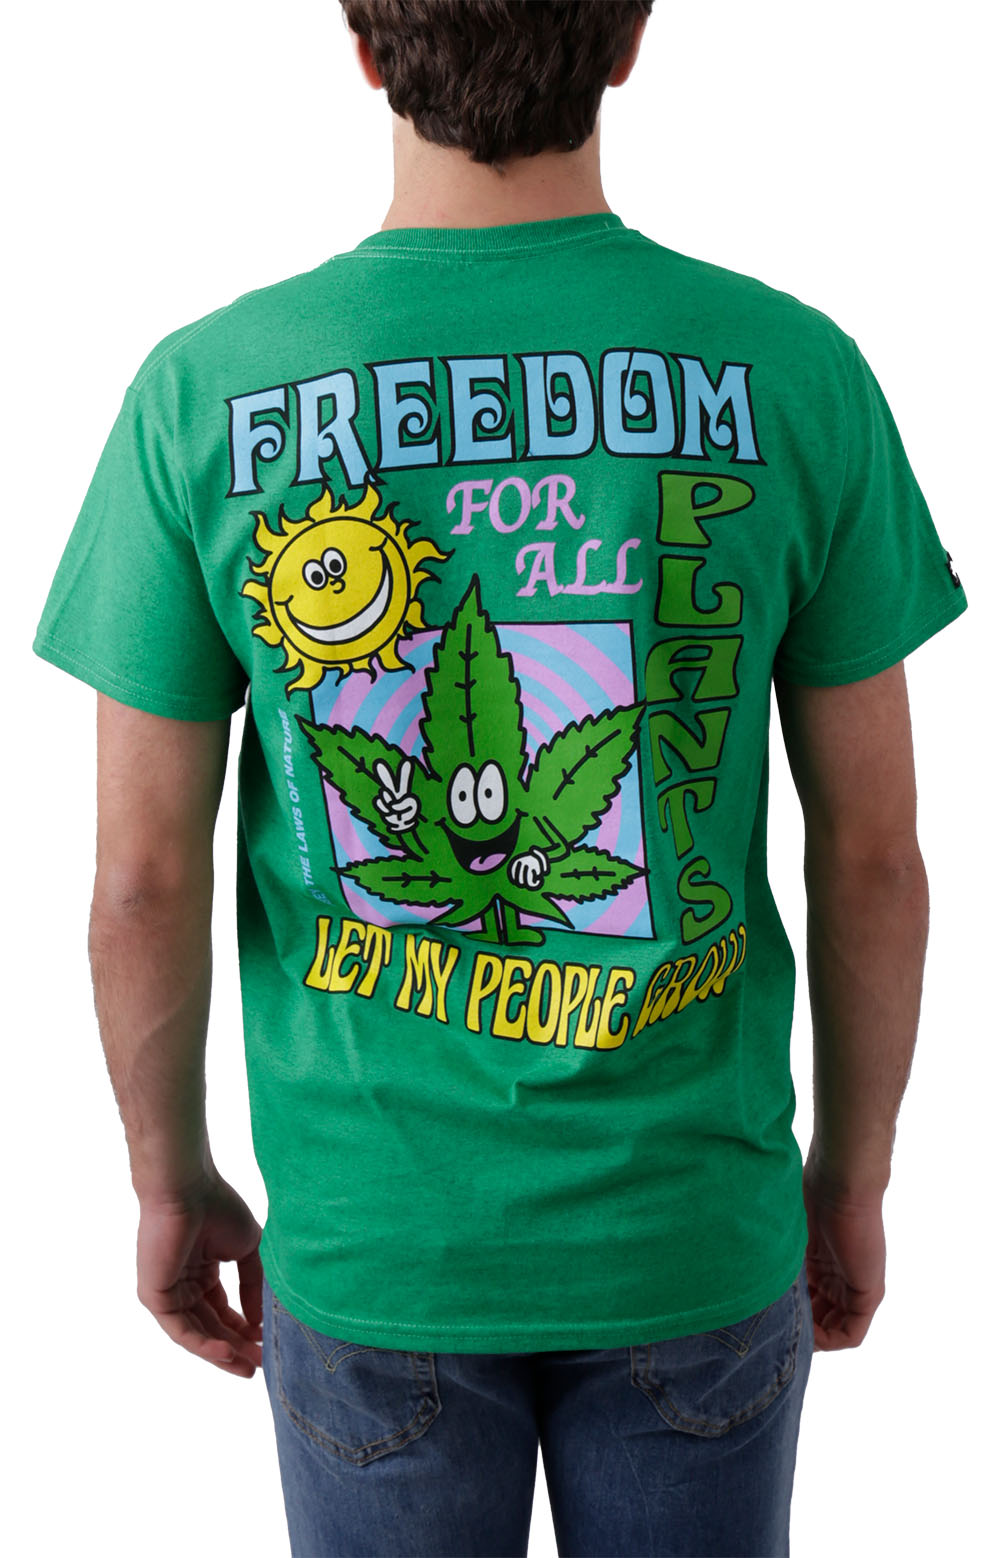 Plant Life T-Shirt - Green